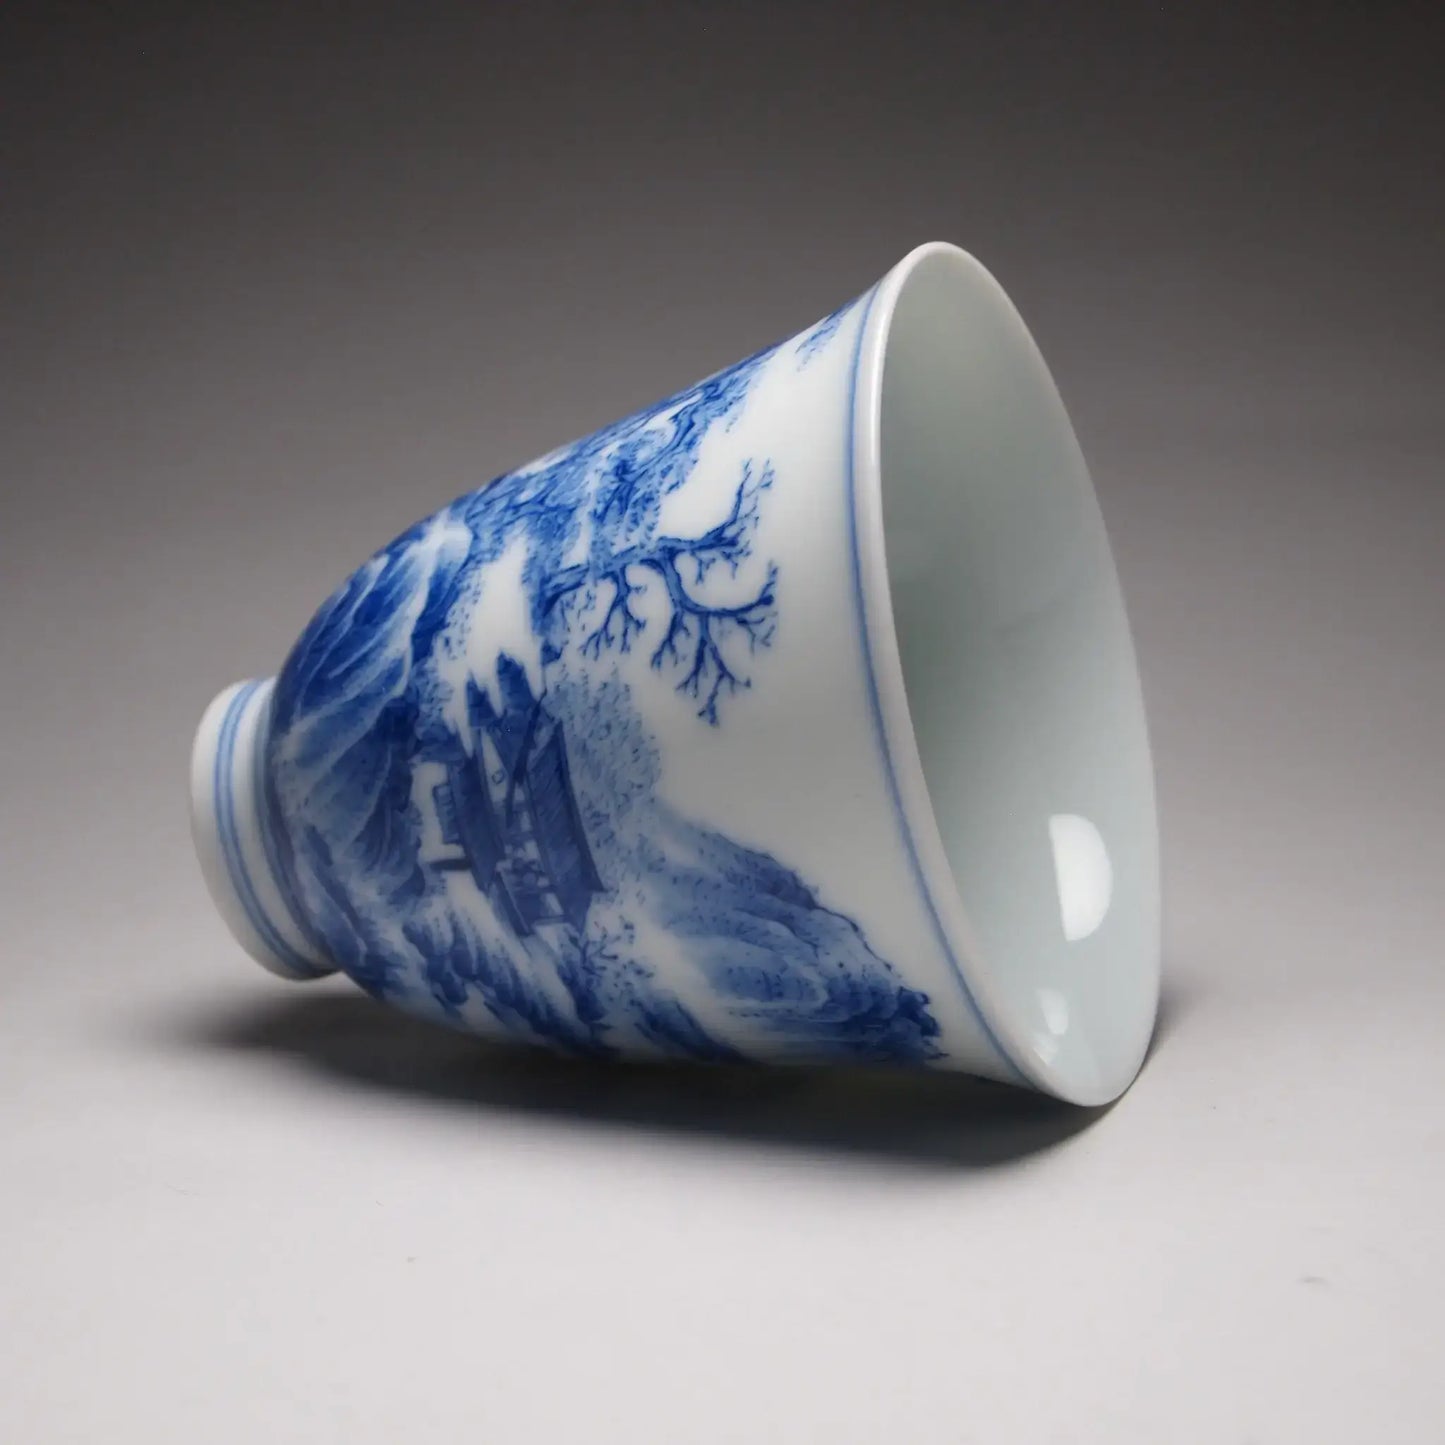 Qinghua Landscape Flower Goddess Jingdezhen Porcelain Teacup